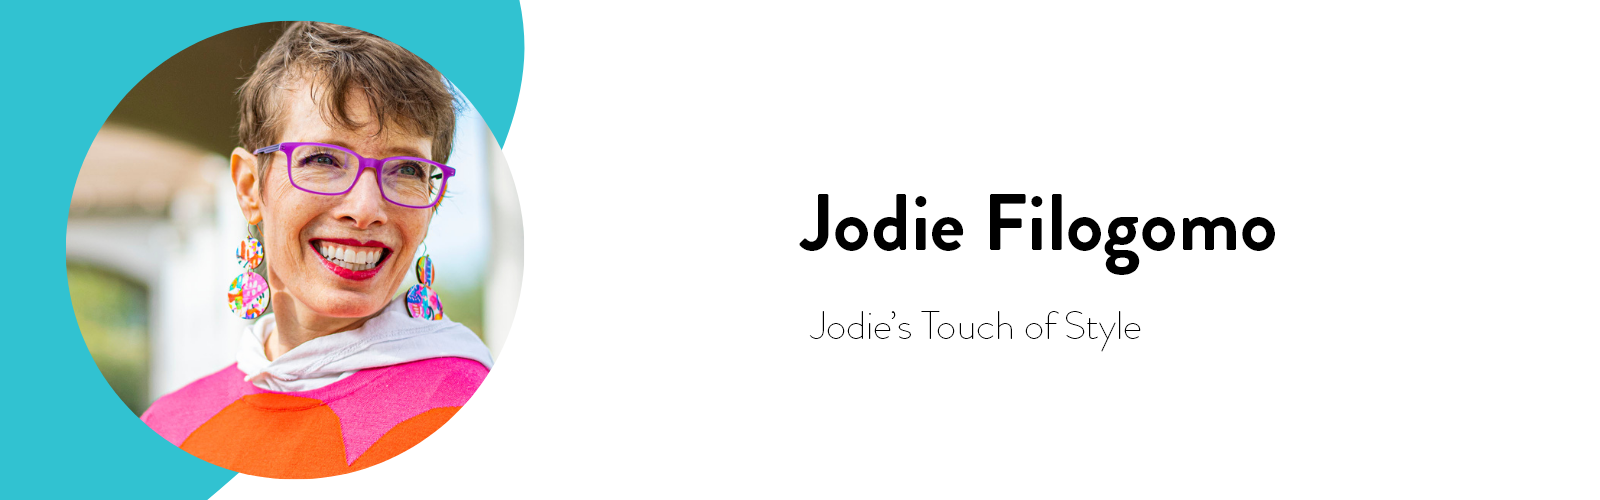 Jodie Filogomo (1600 x 500 px)